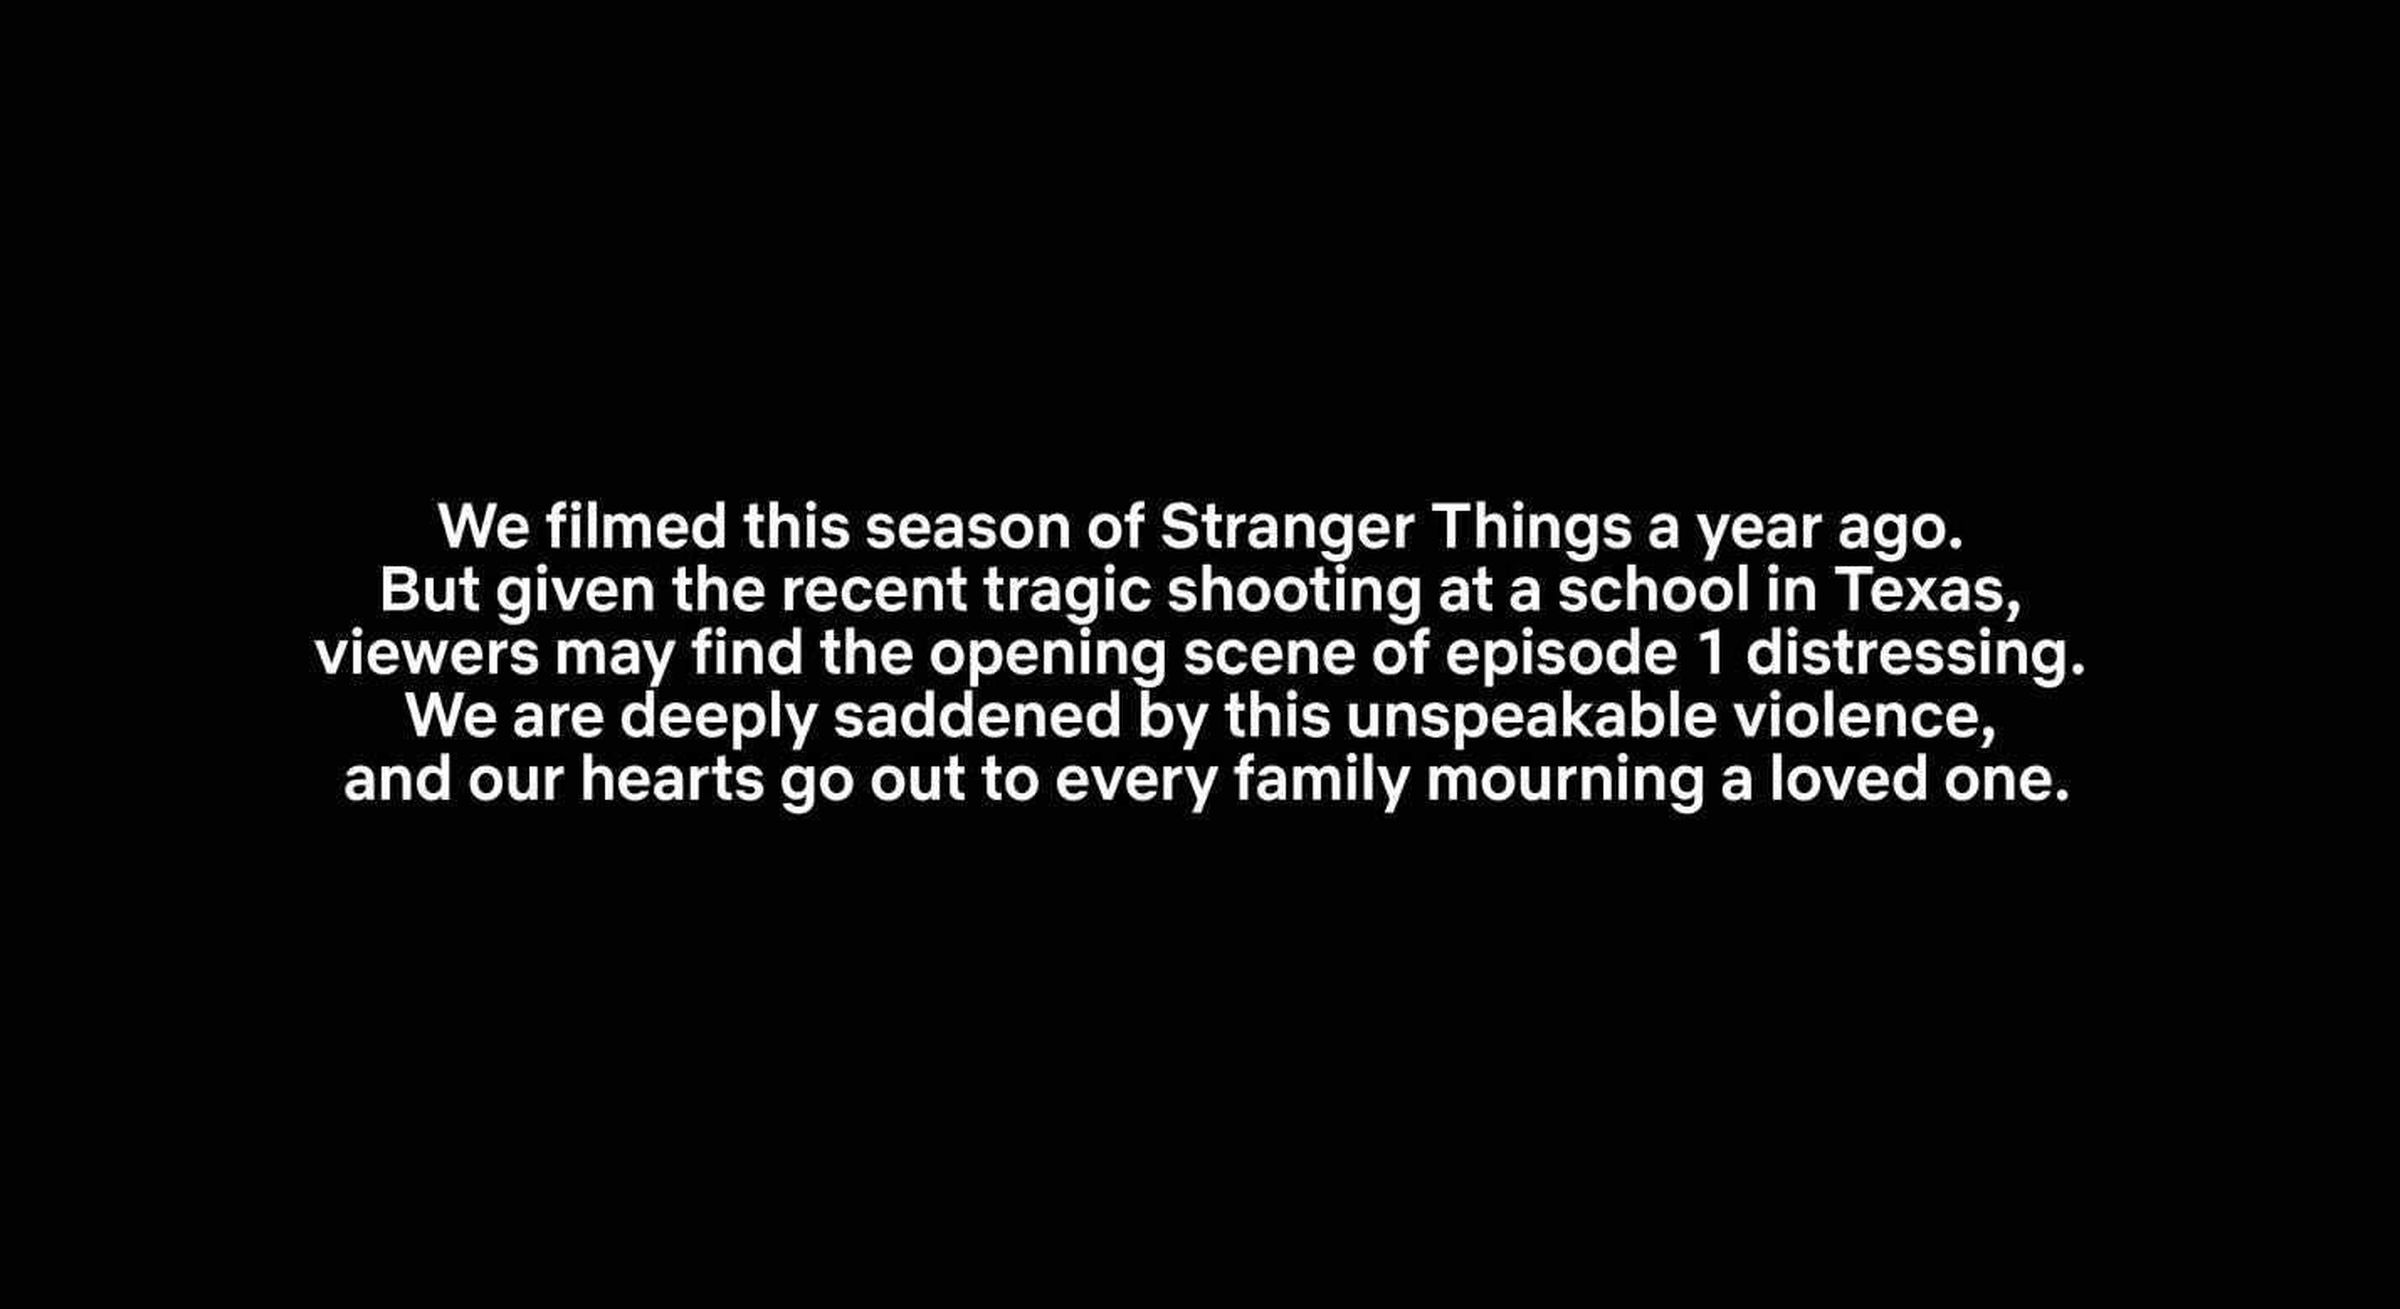 Stranger Things' Season 4 Adds Warning After Texas School Shooting